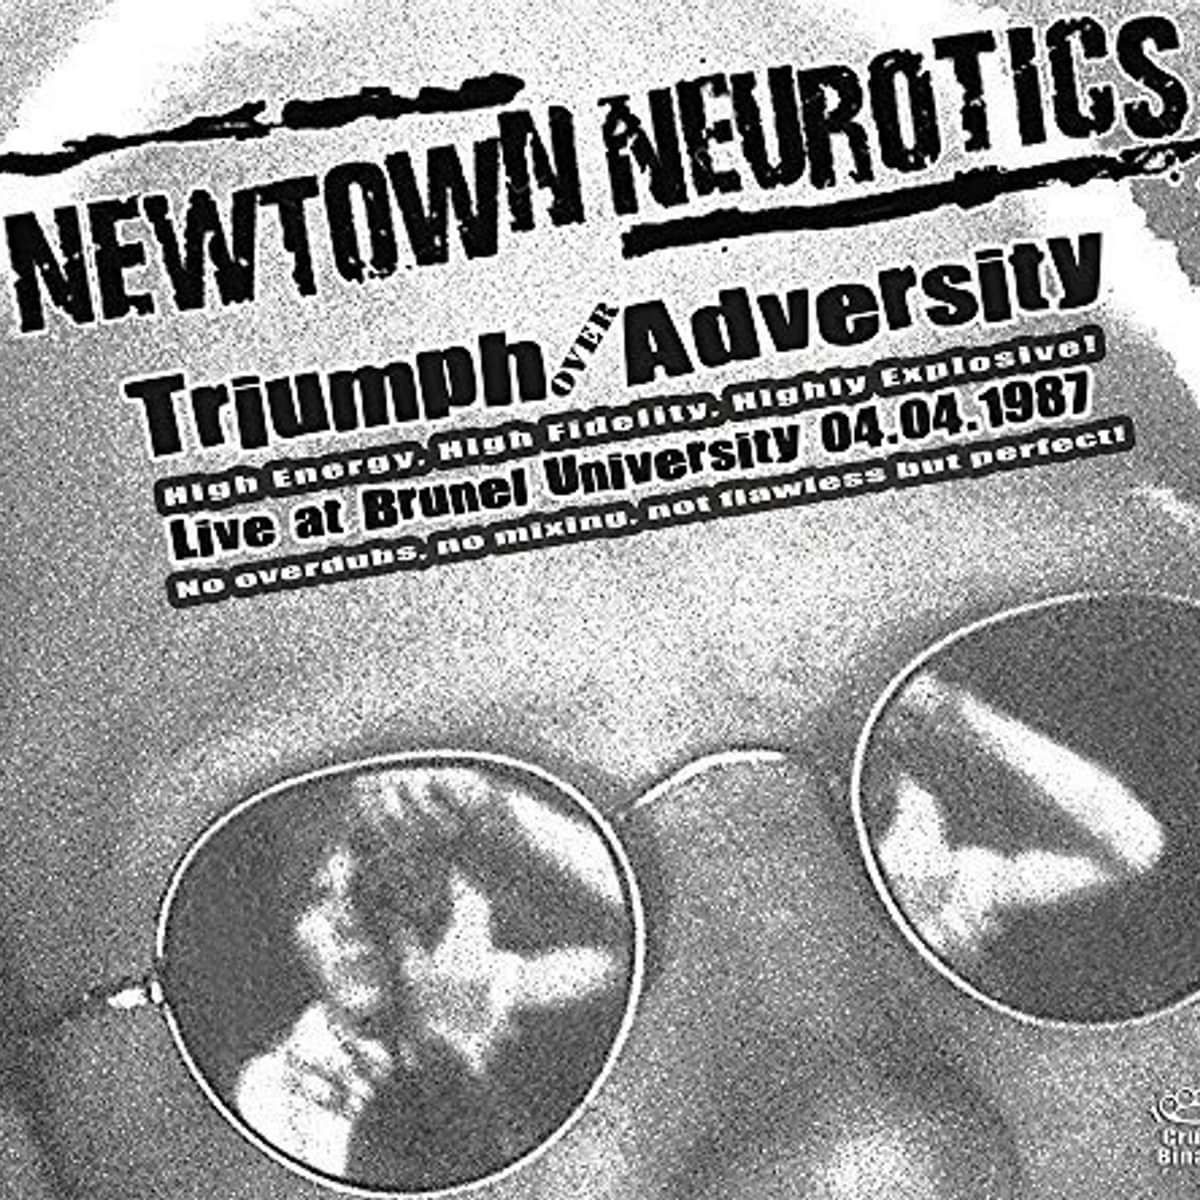 Triumph Over Adversity CD - Newtown Neurotics